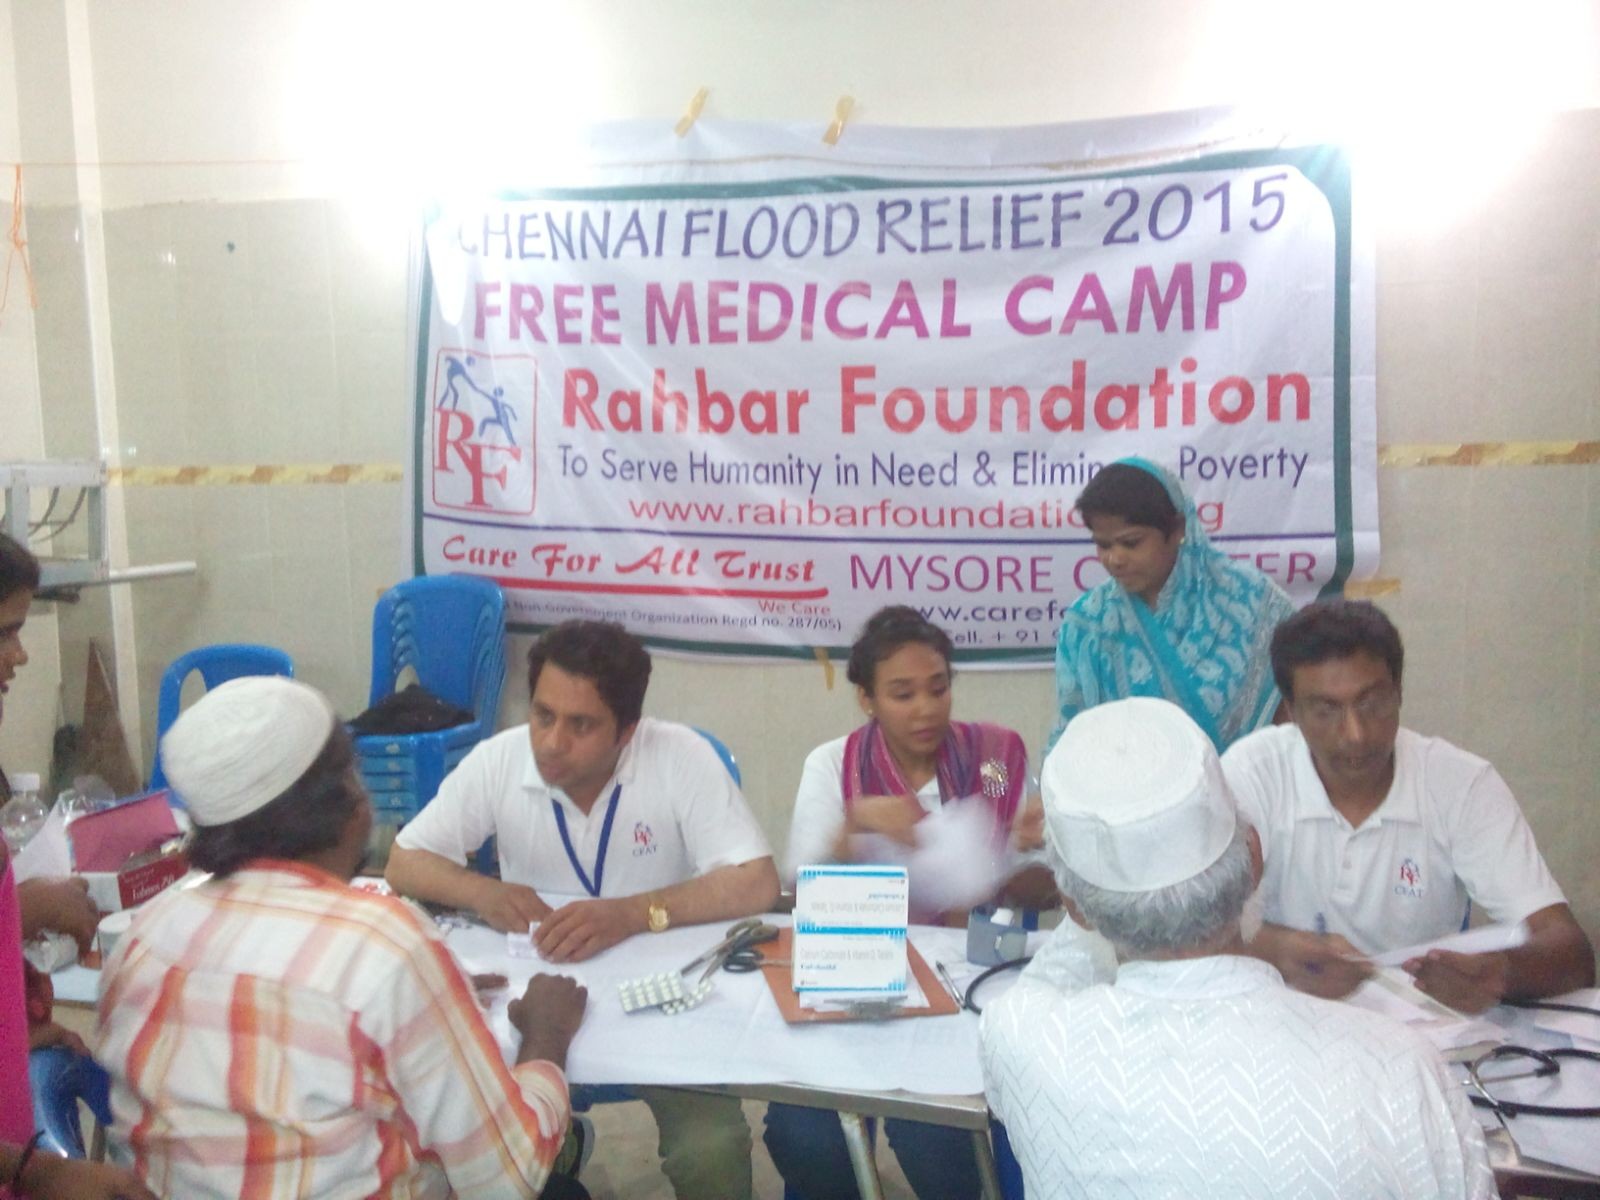 Free Medical Camp - Chennai Flood Relief